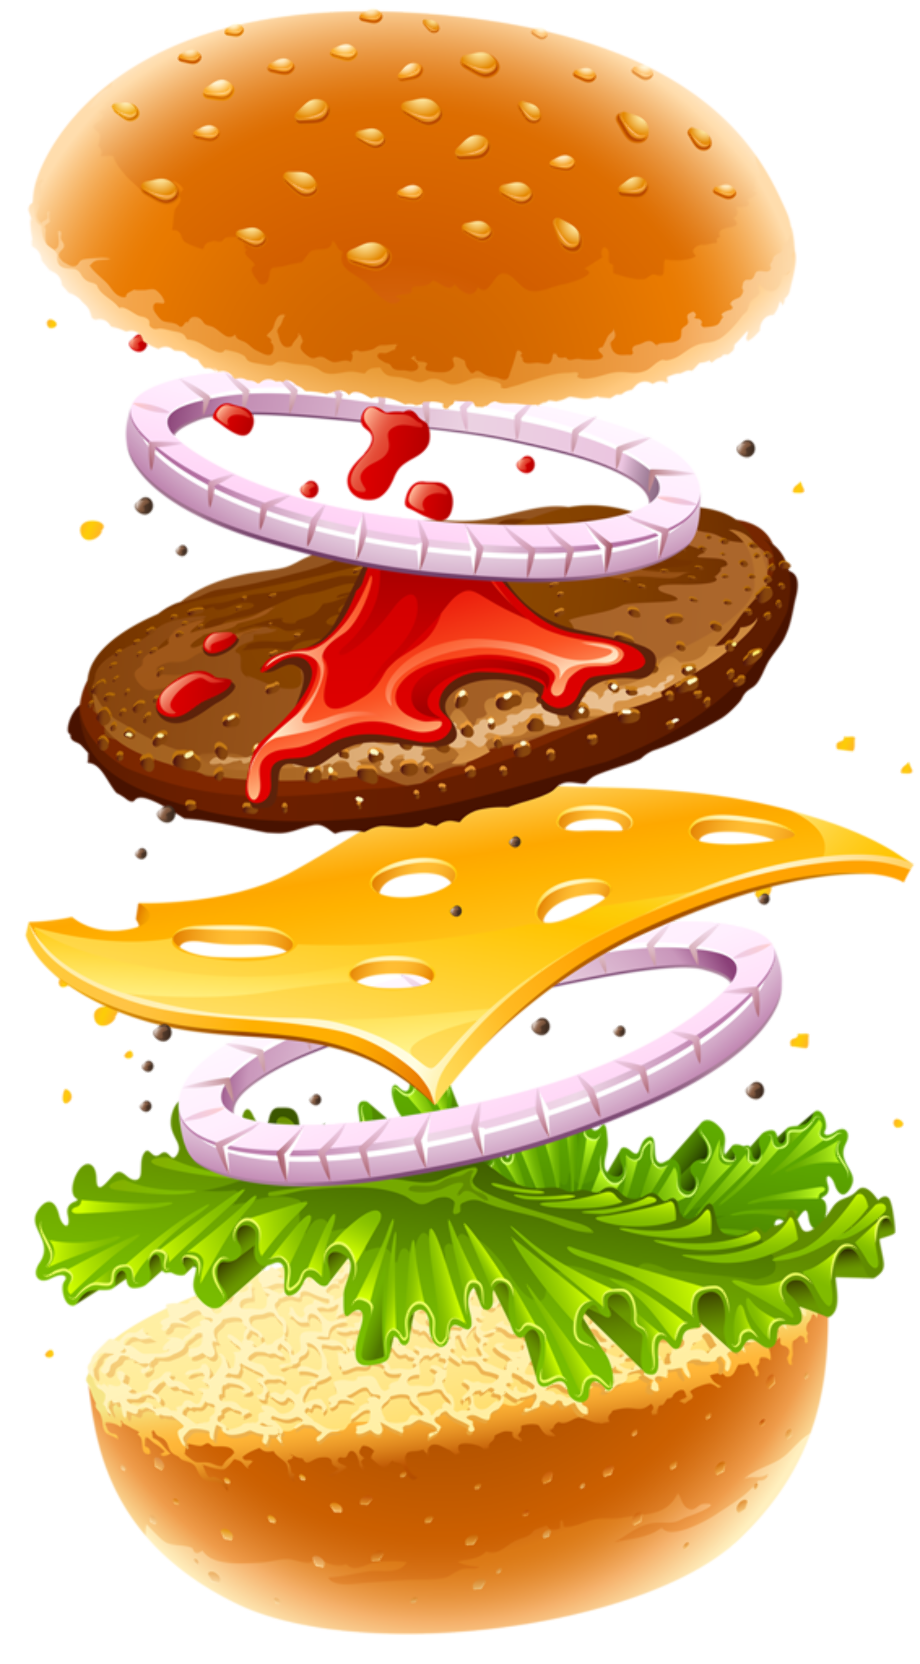 Download High Quality Food clipart hamburger Transparent PNG Images